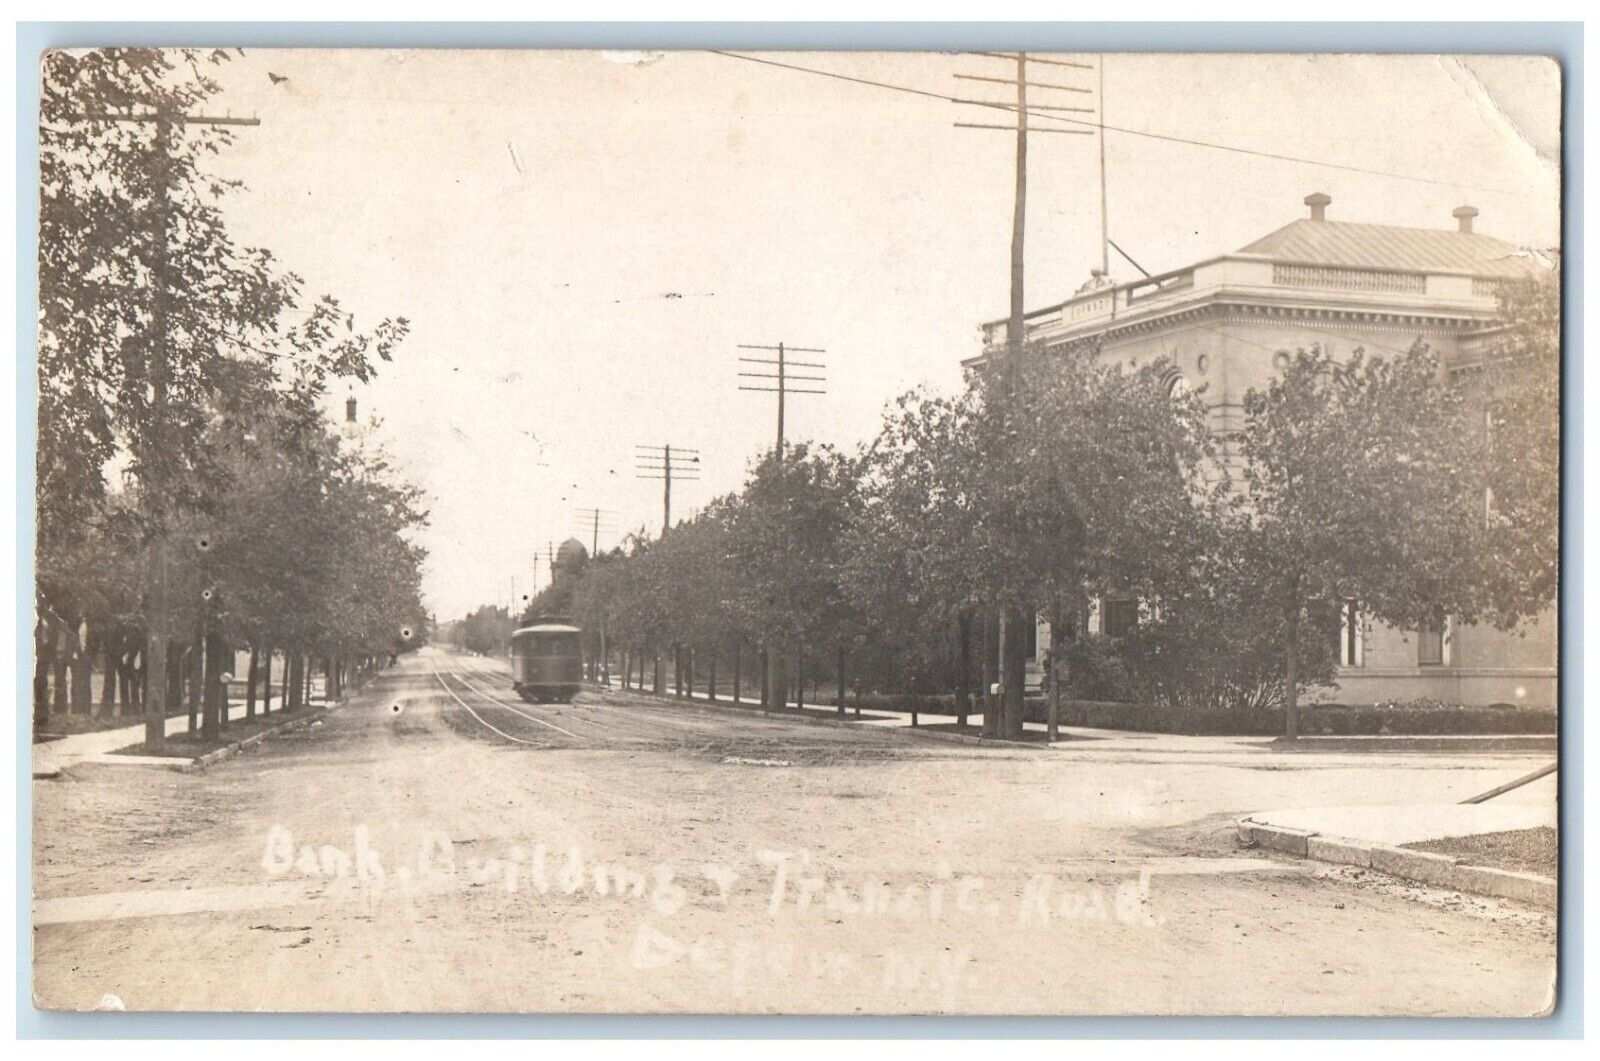 1911 Bank Building Transit Road Trolley Depew New York NY RPPC Photo Postcard